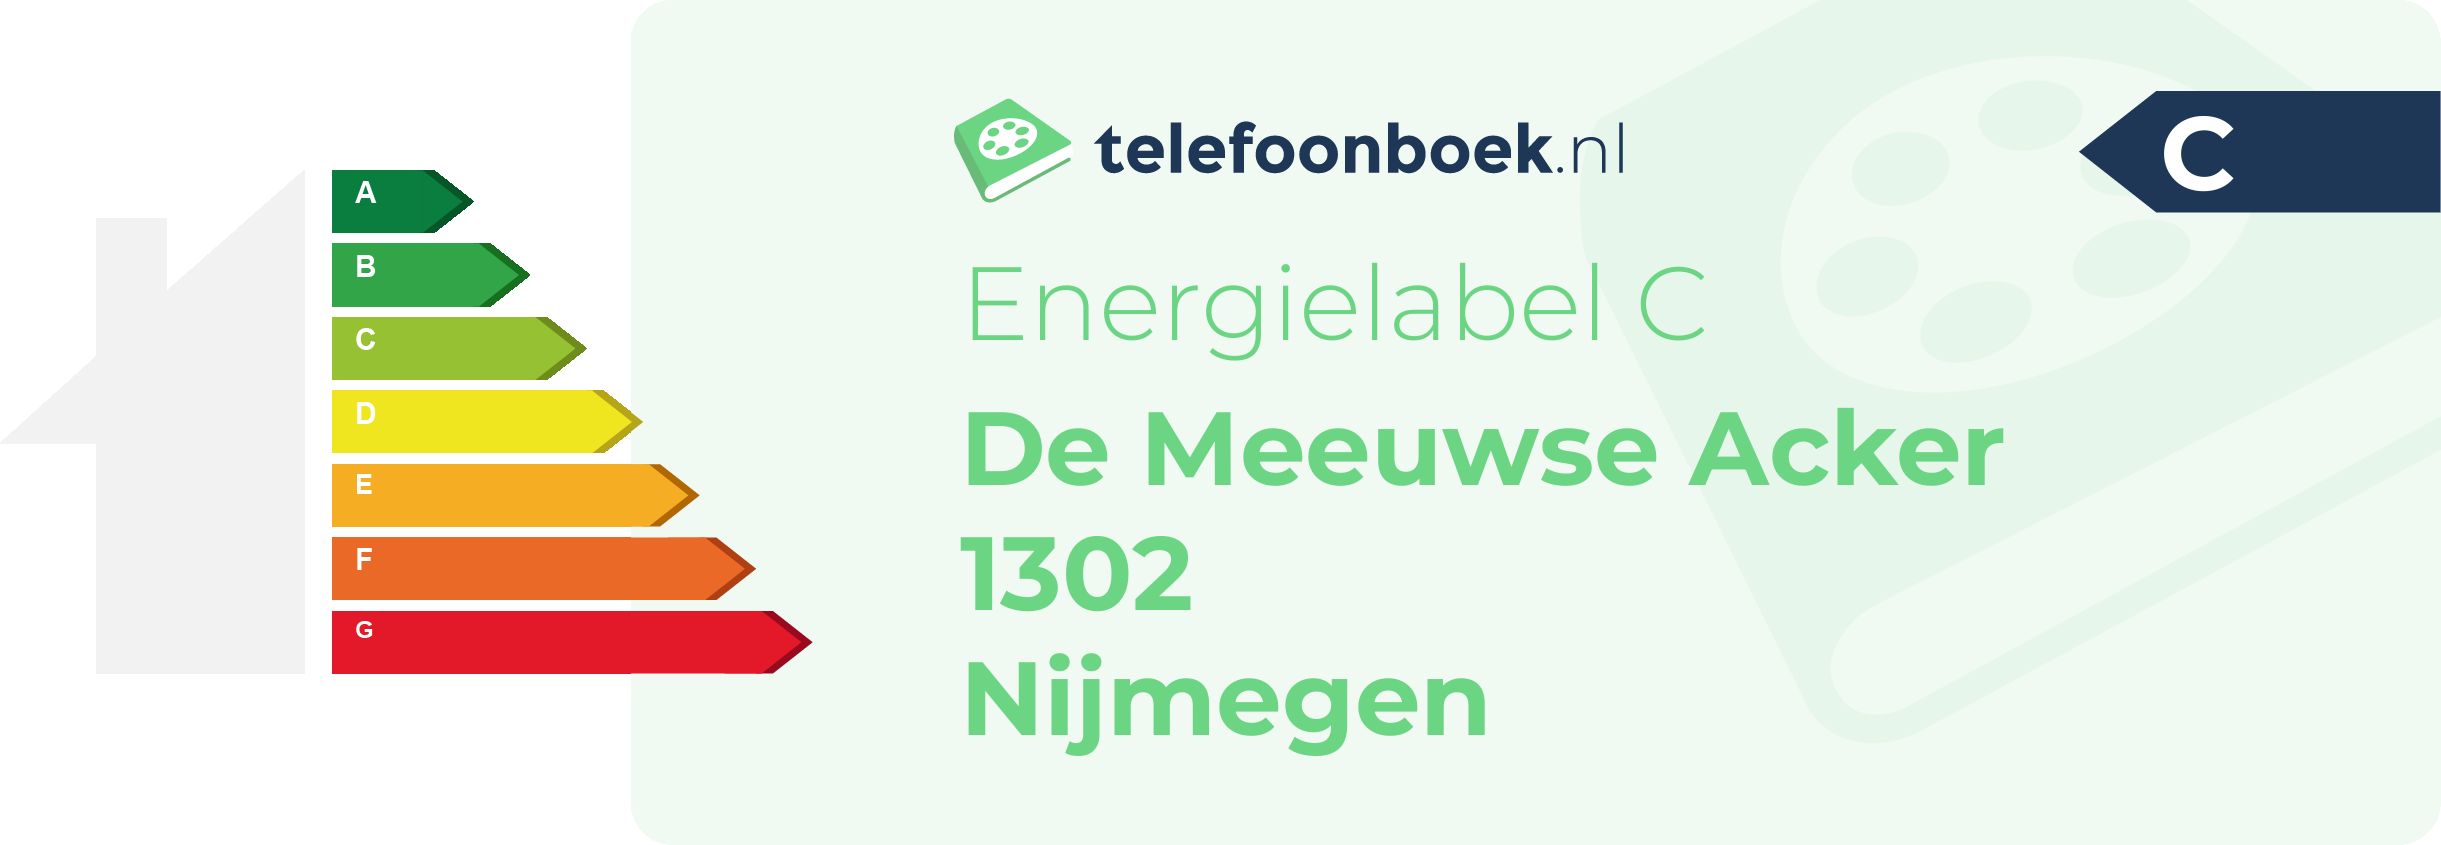 Energielabel De Meeuwse Acker 1302 Nijmegen